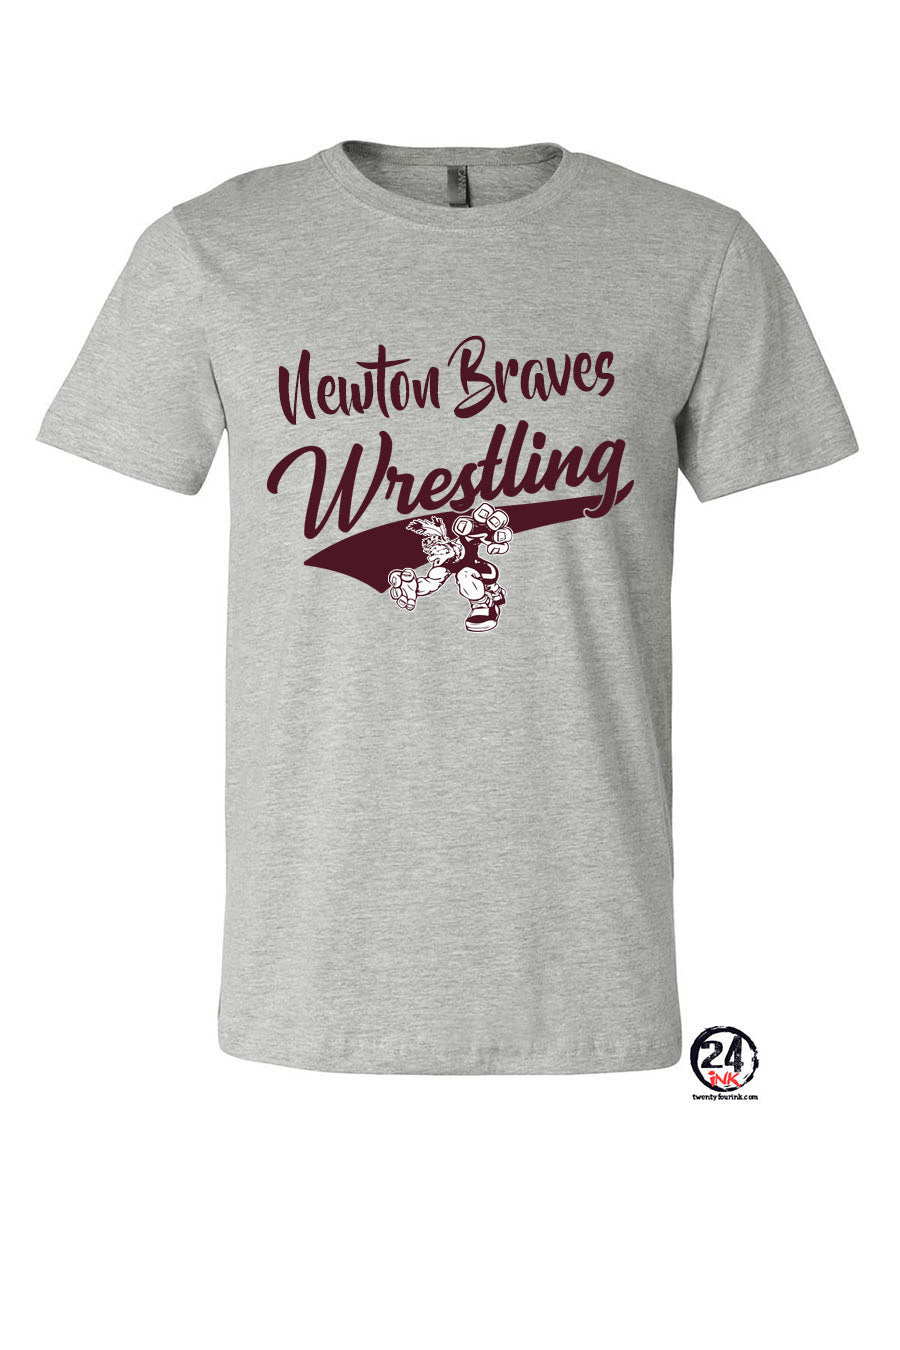 Newton wrestling design 7 T-Shirt